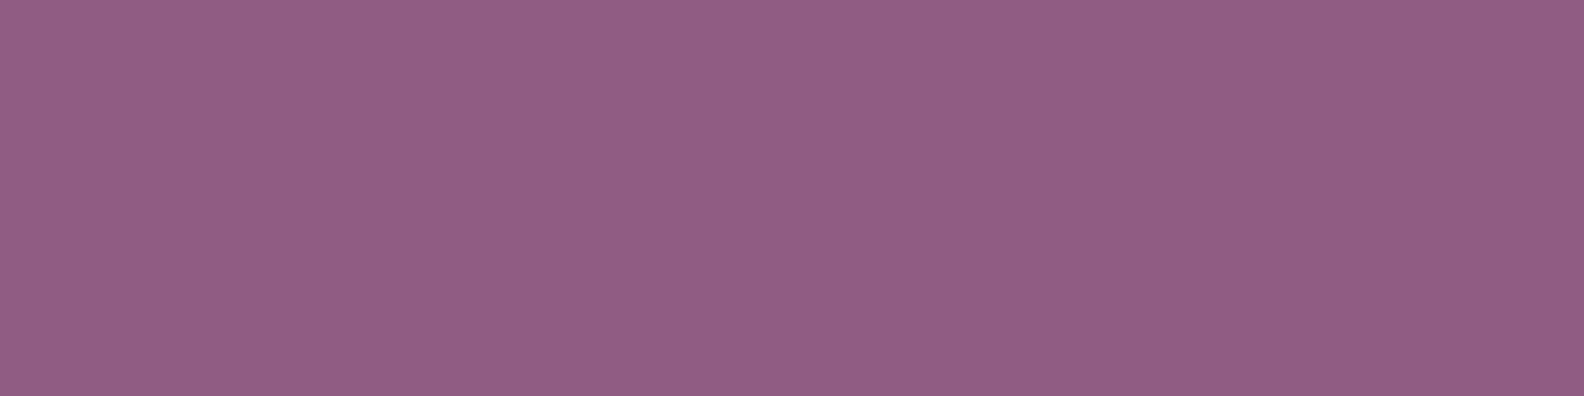 1584x396 Antique Fuchsia Solid Color Background